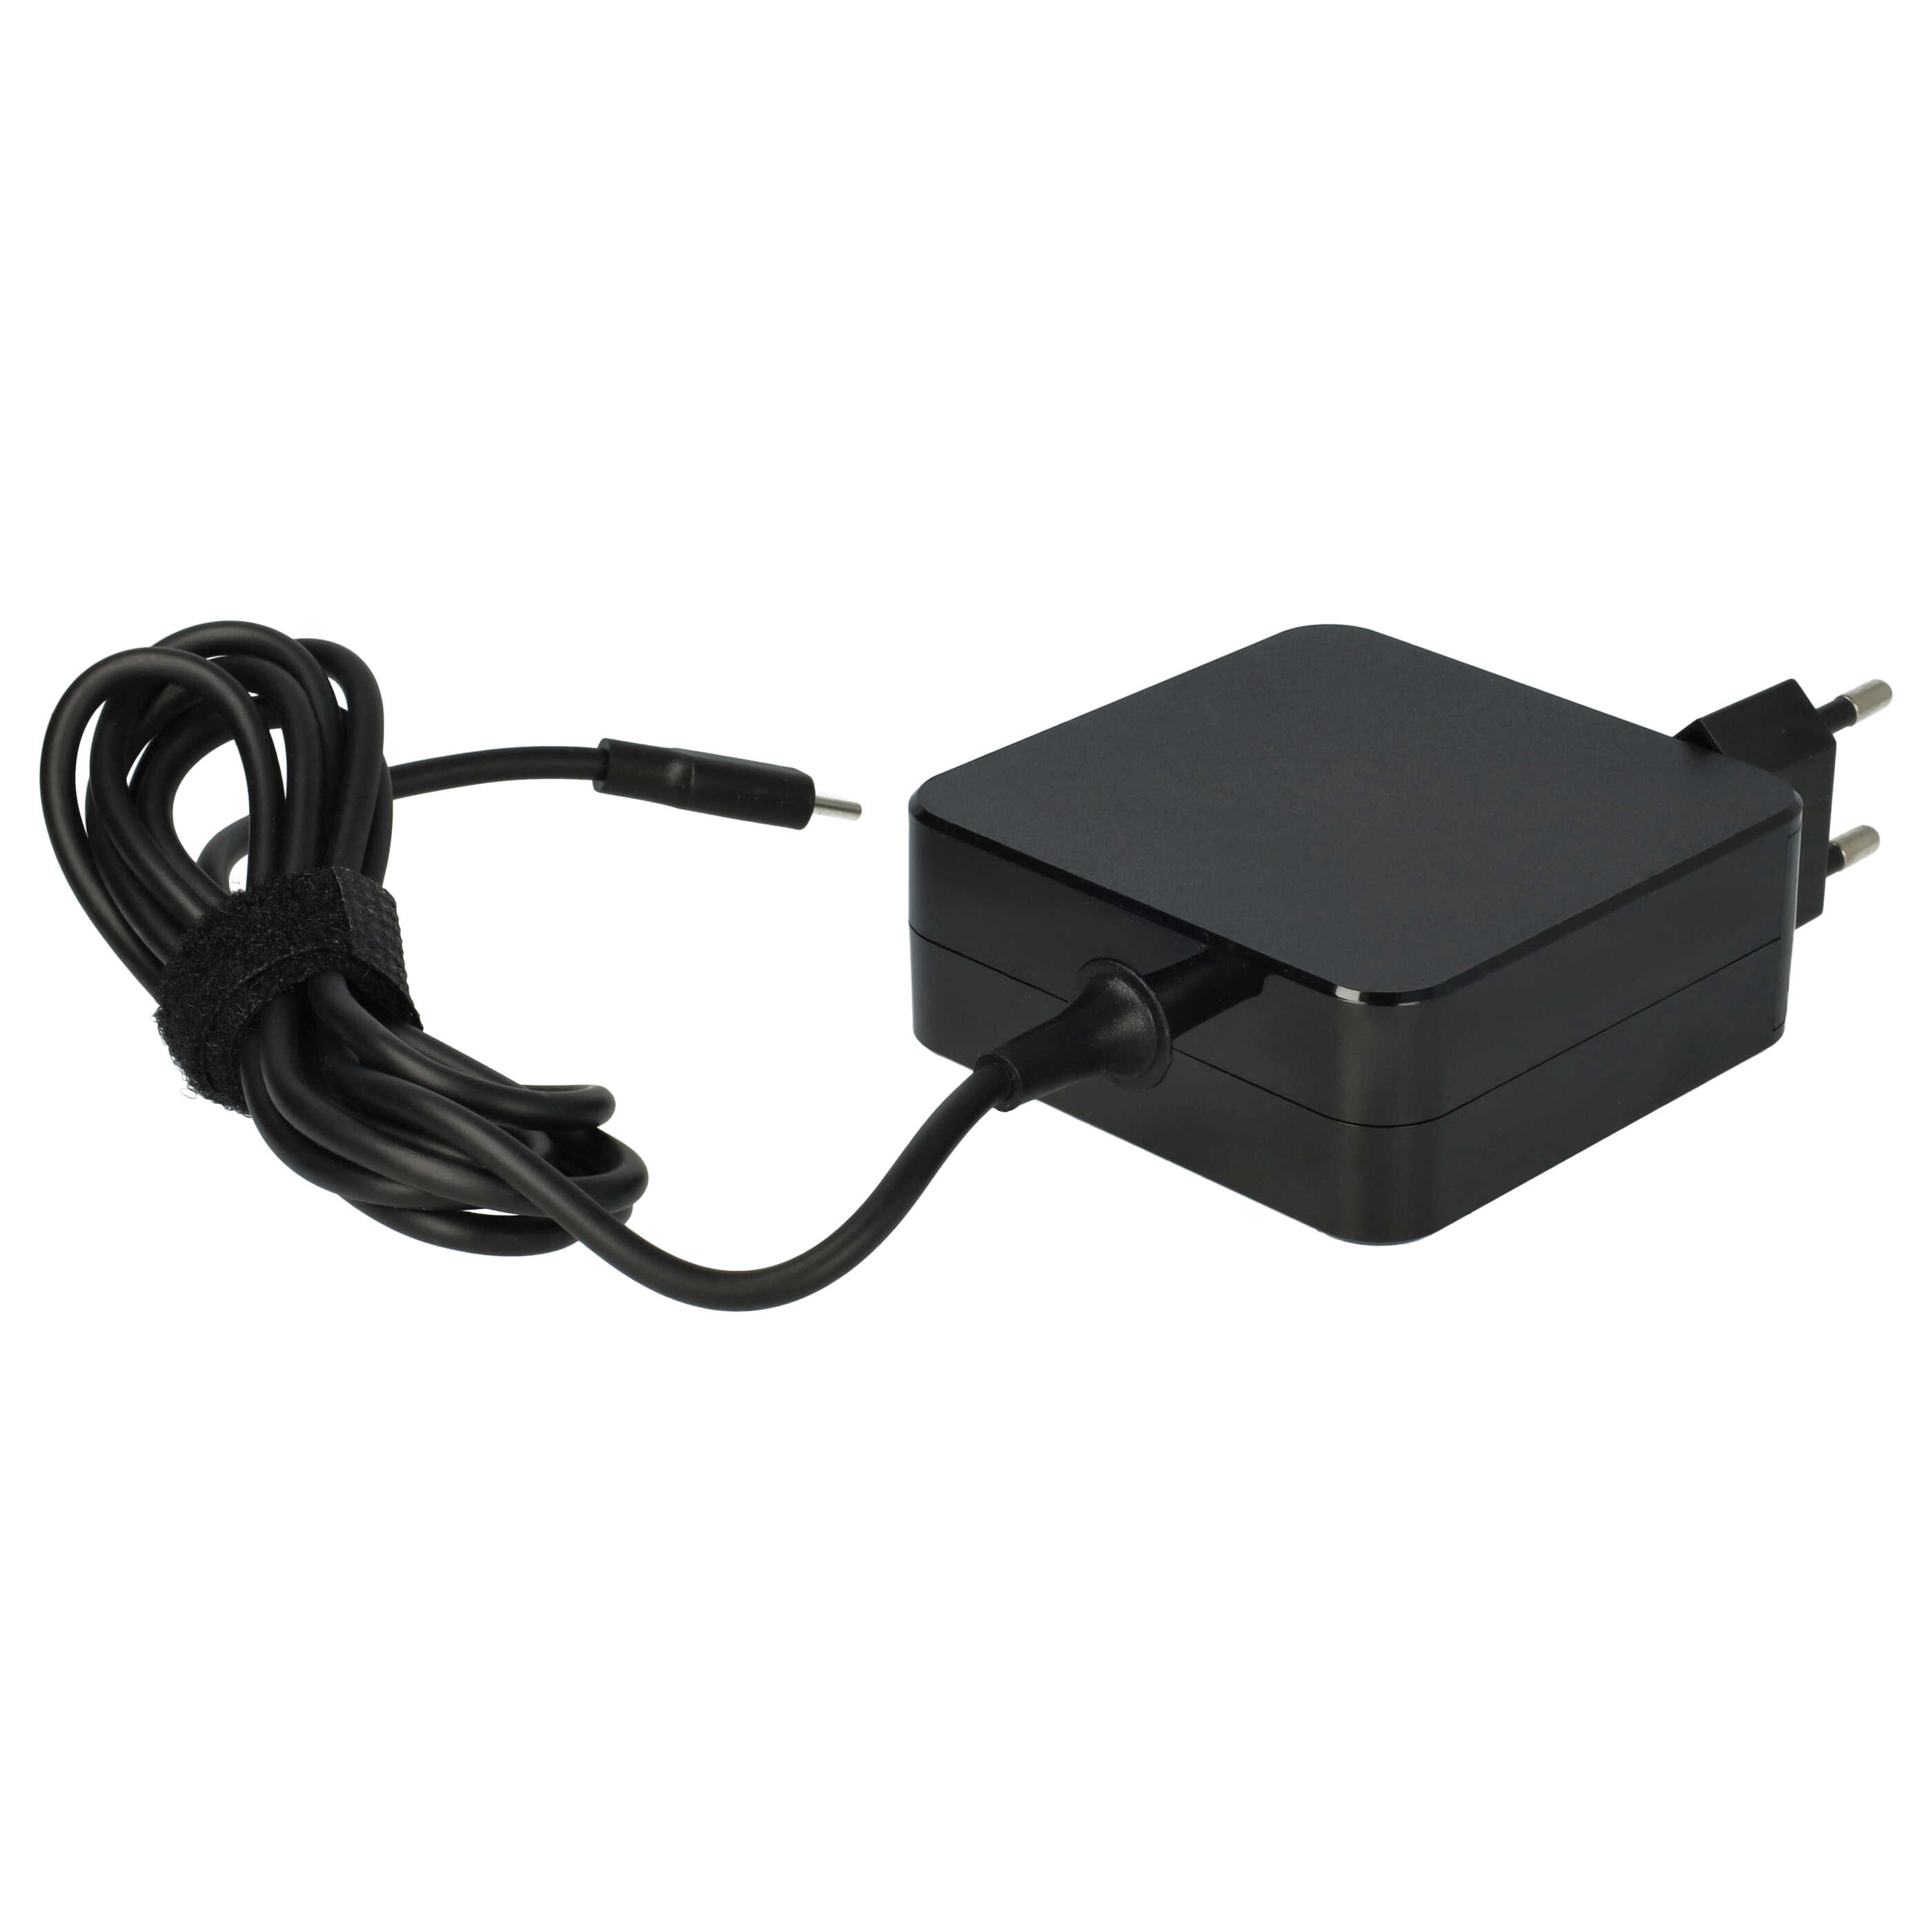 Mains Power Adapter suitable for P20, 9 (EVA-AL10) HuaweiNotebook etc. - 150 cm, 65 W